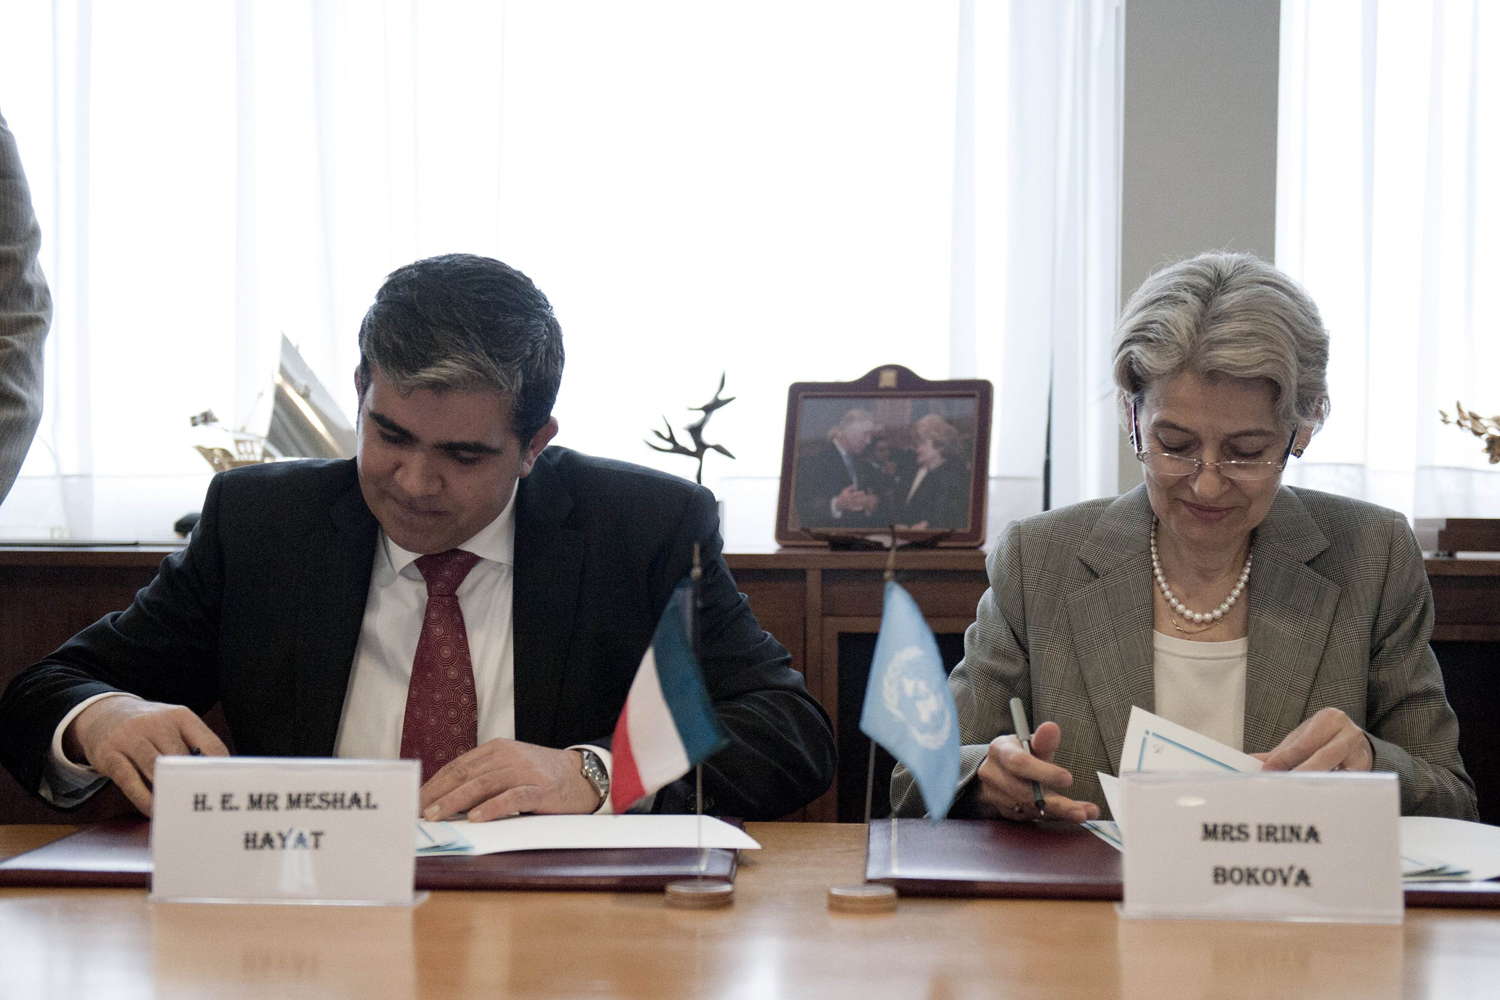 Kuwait's permanent representative to UNESCO Dr. Misha'al Hayat with Director-General of UNESCO Irina Bokova during the signature ceremony